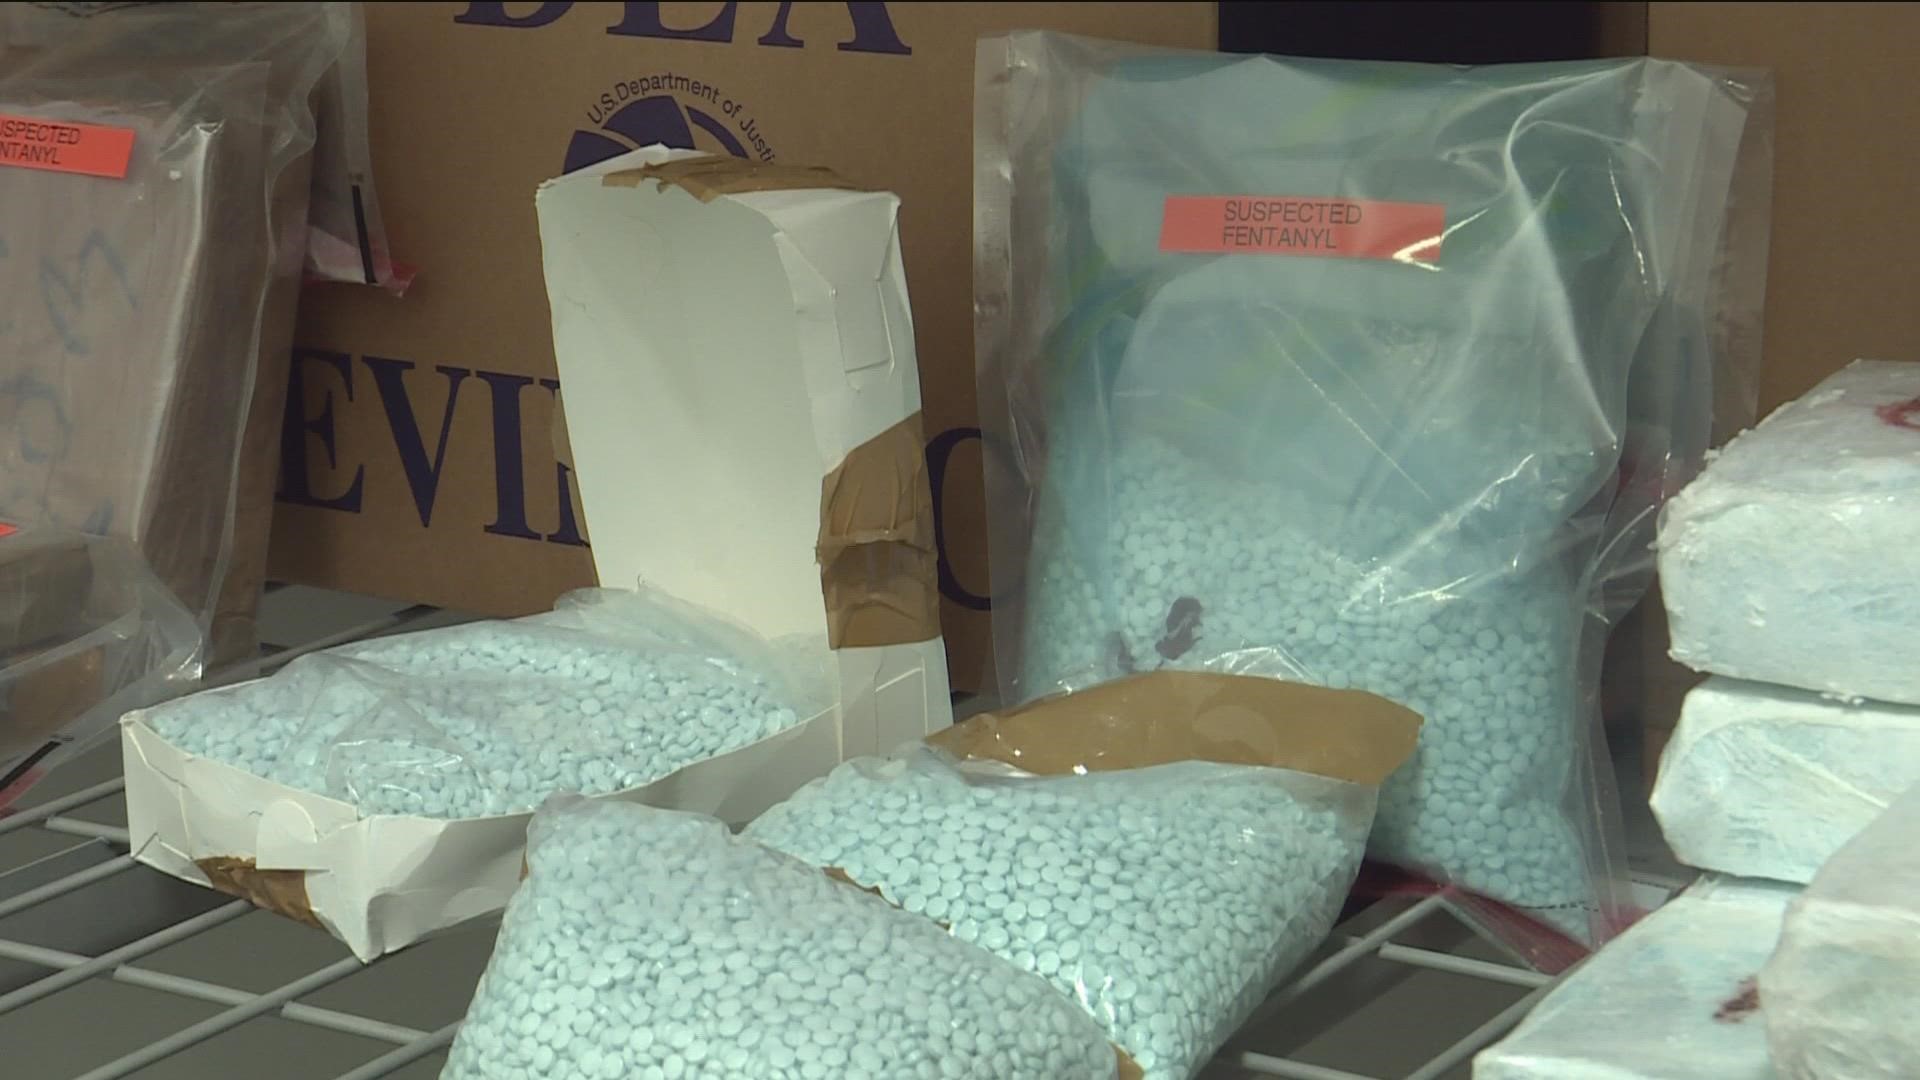 The Drug Enforcement Agency seizes around 20 million fentanyl pills. Over half of those were seized in Arizona.